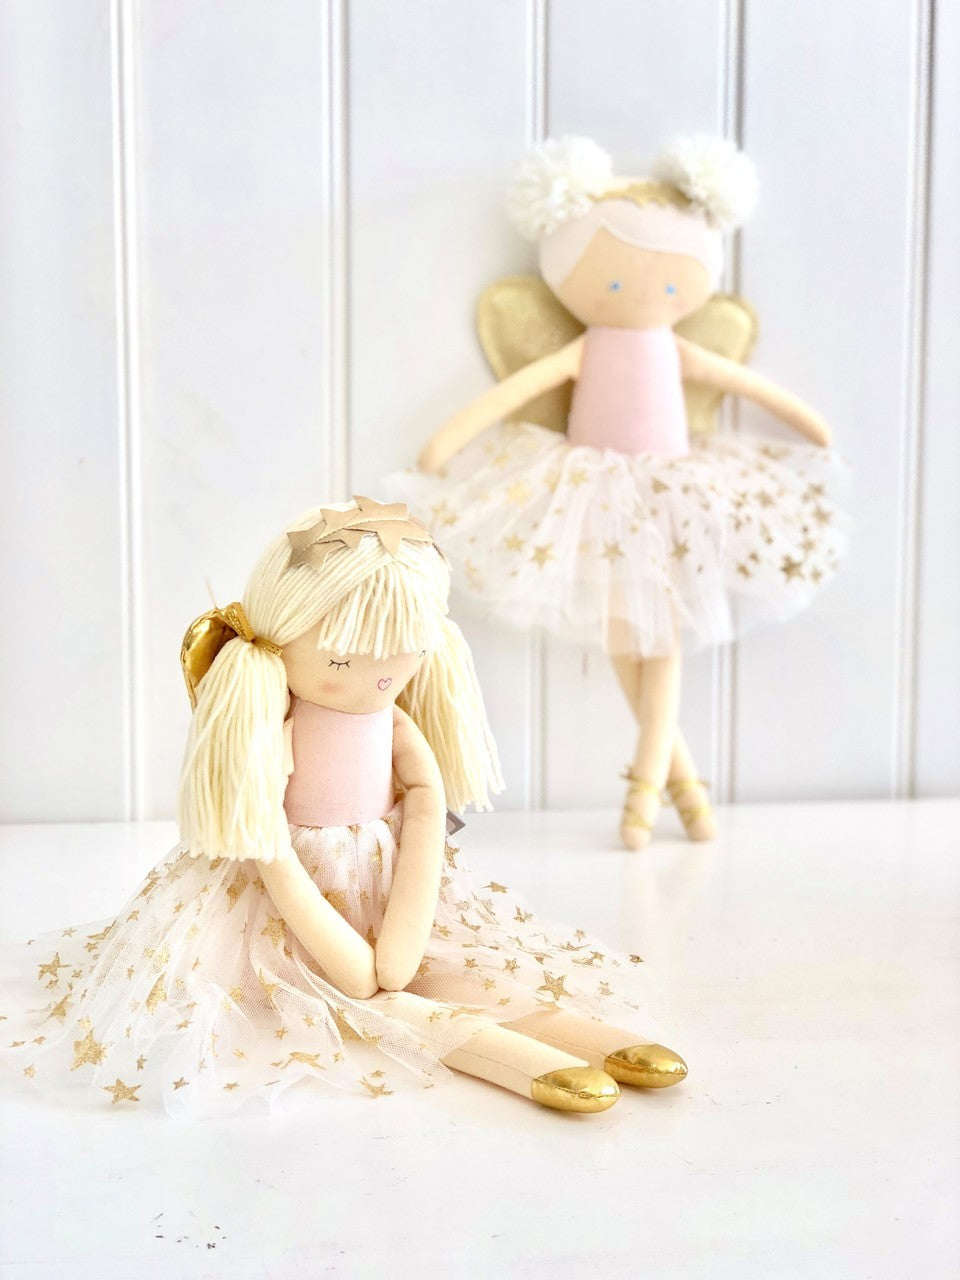 Alimrose Sophie Fairy Doll 48cm